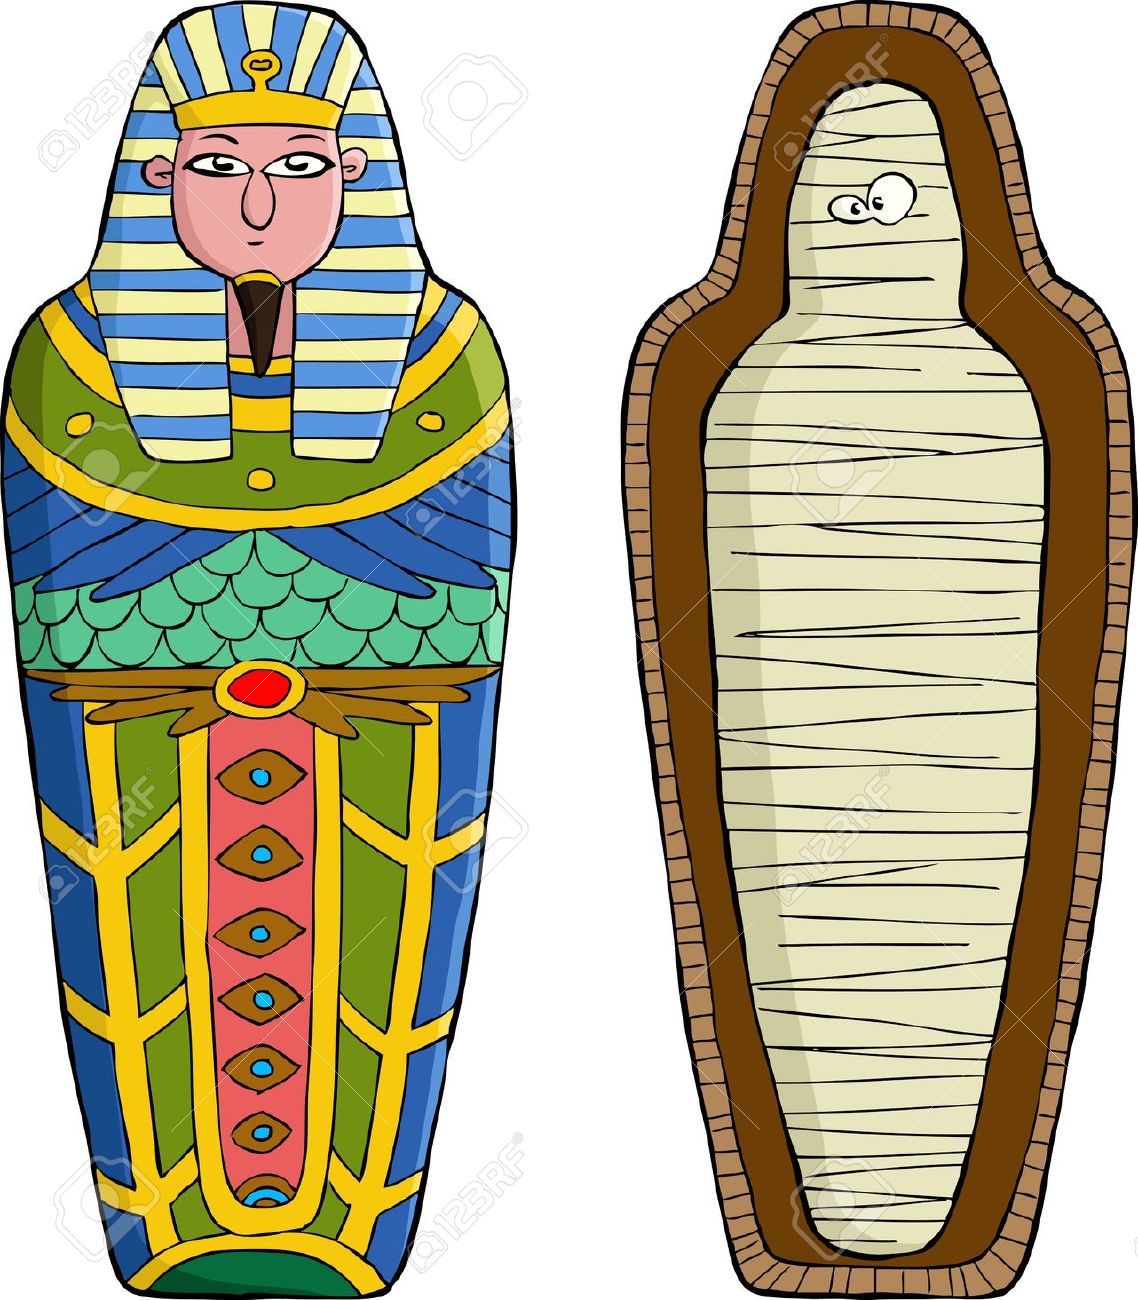 Mummy egyptian tomb clipart